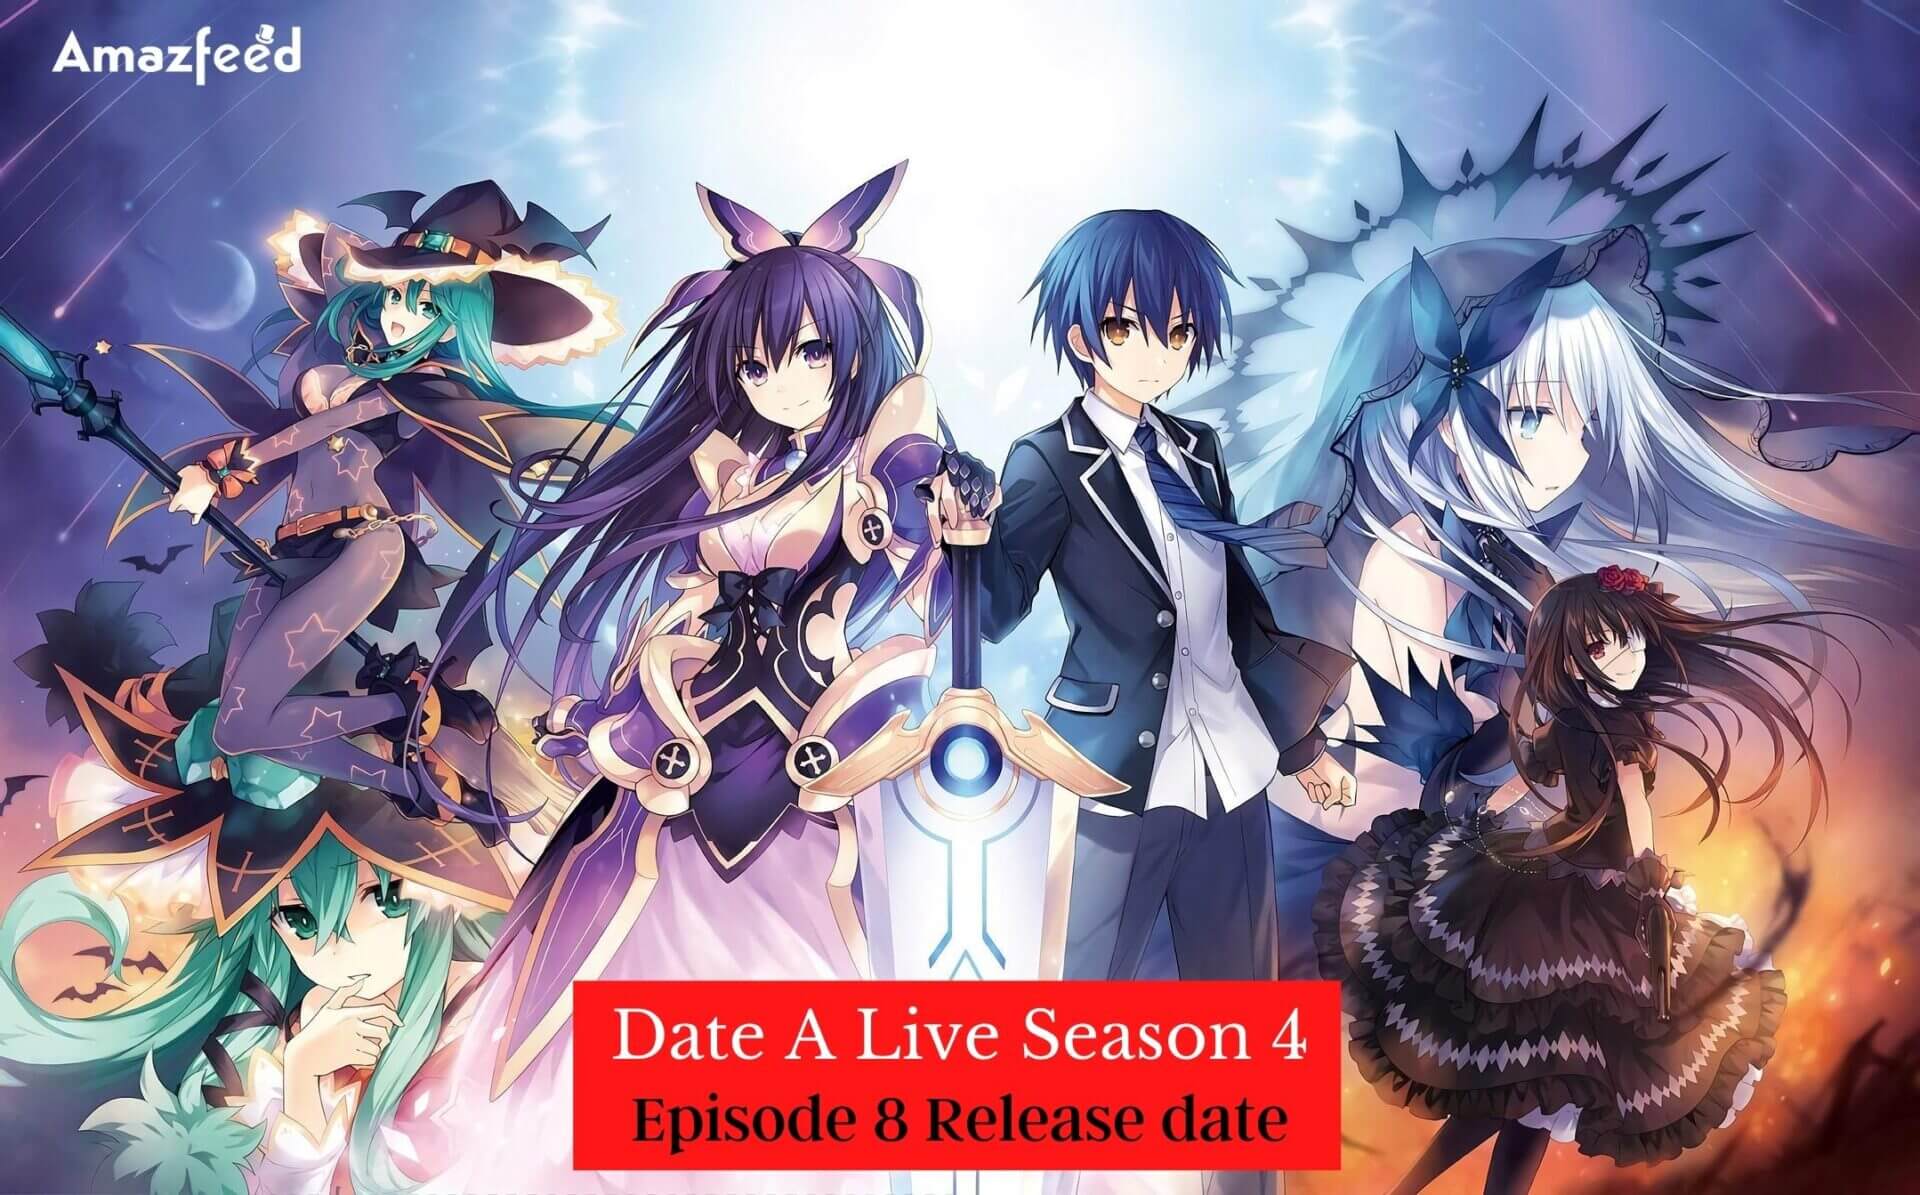 Date A Live Season 4 Episode 8 release date